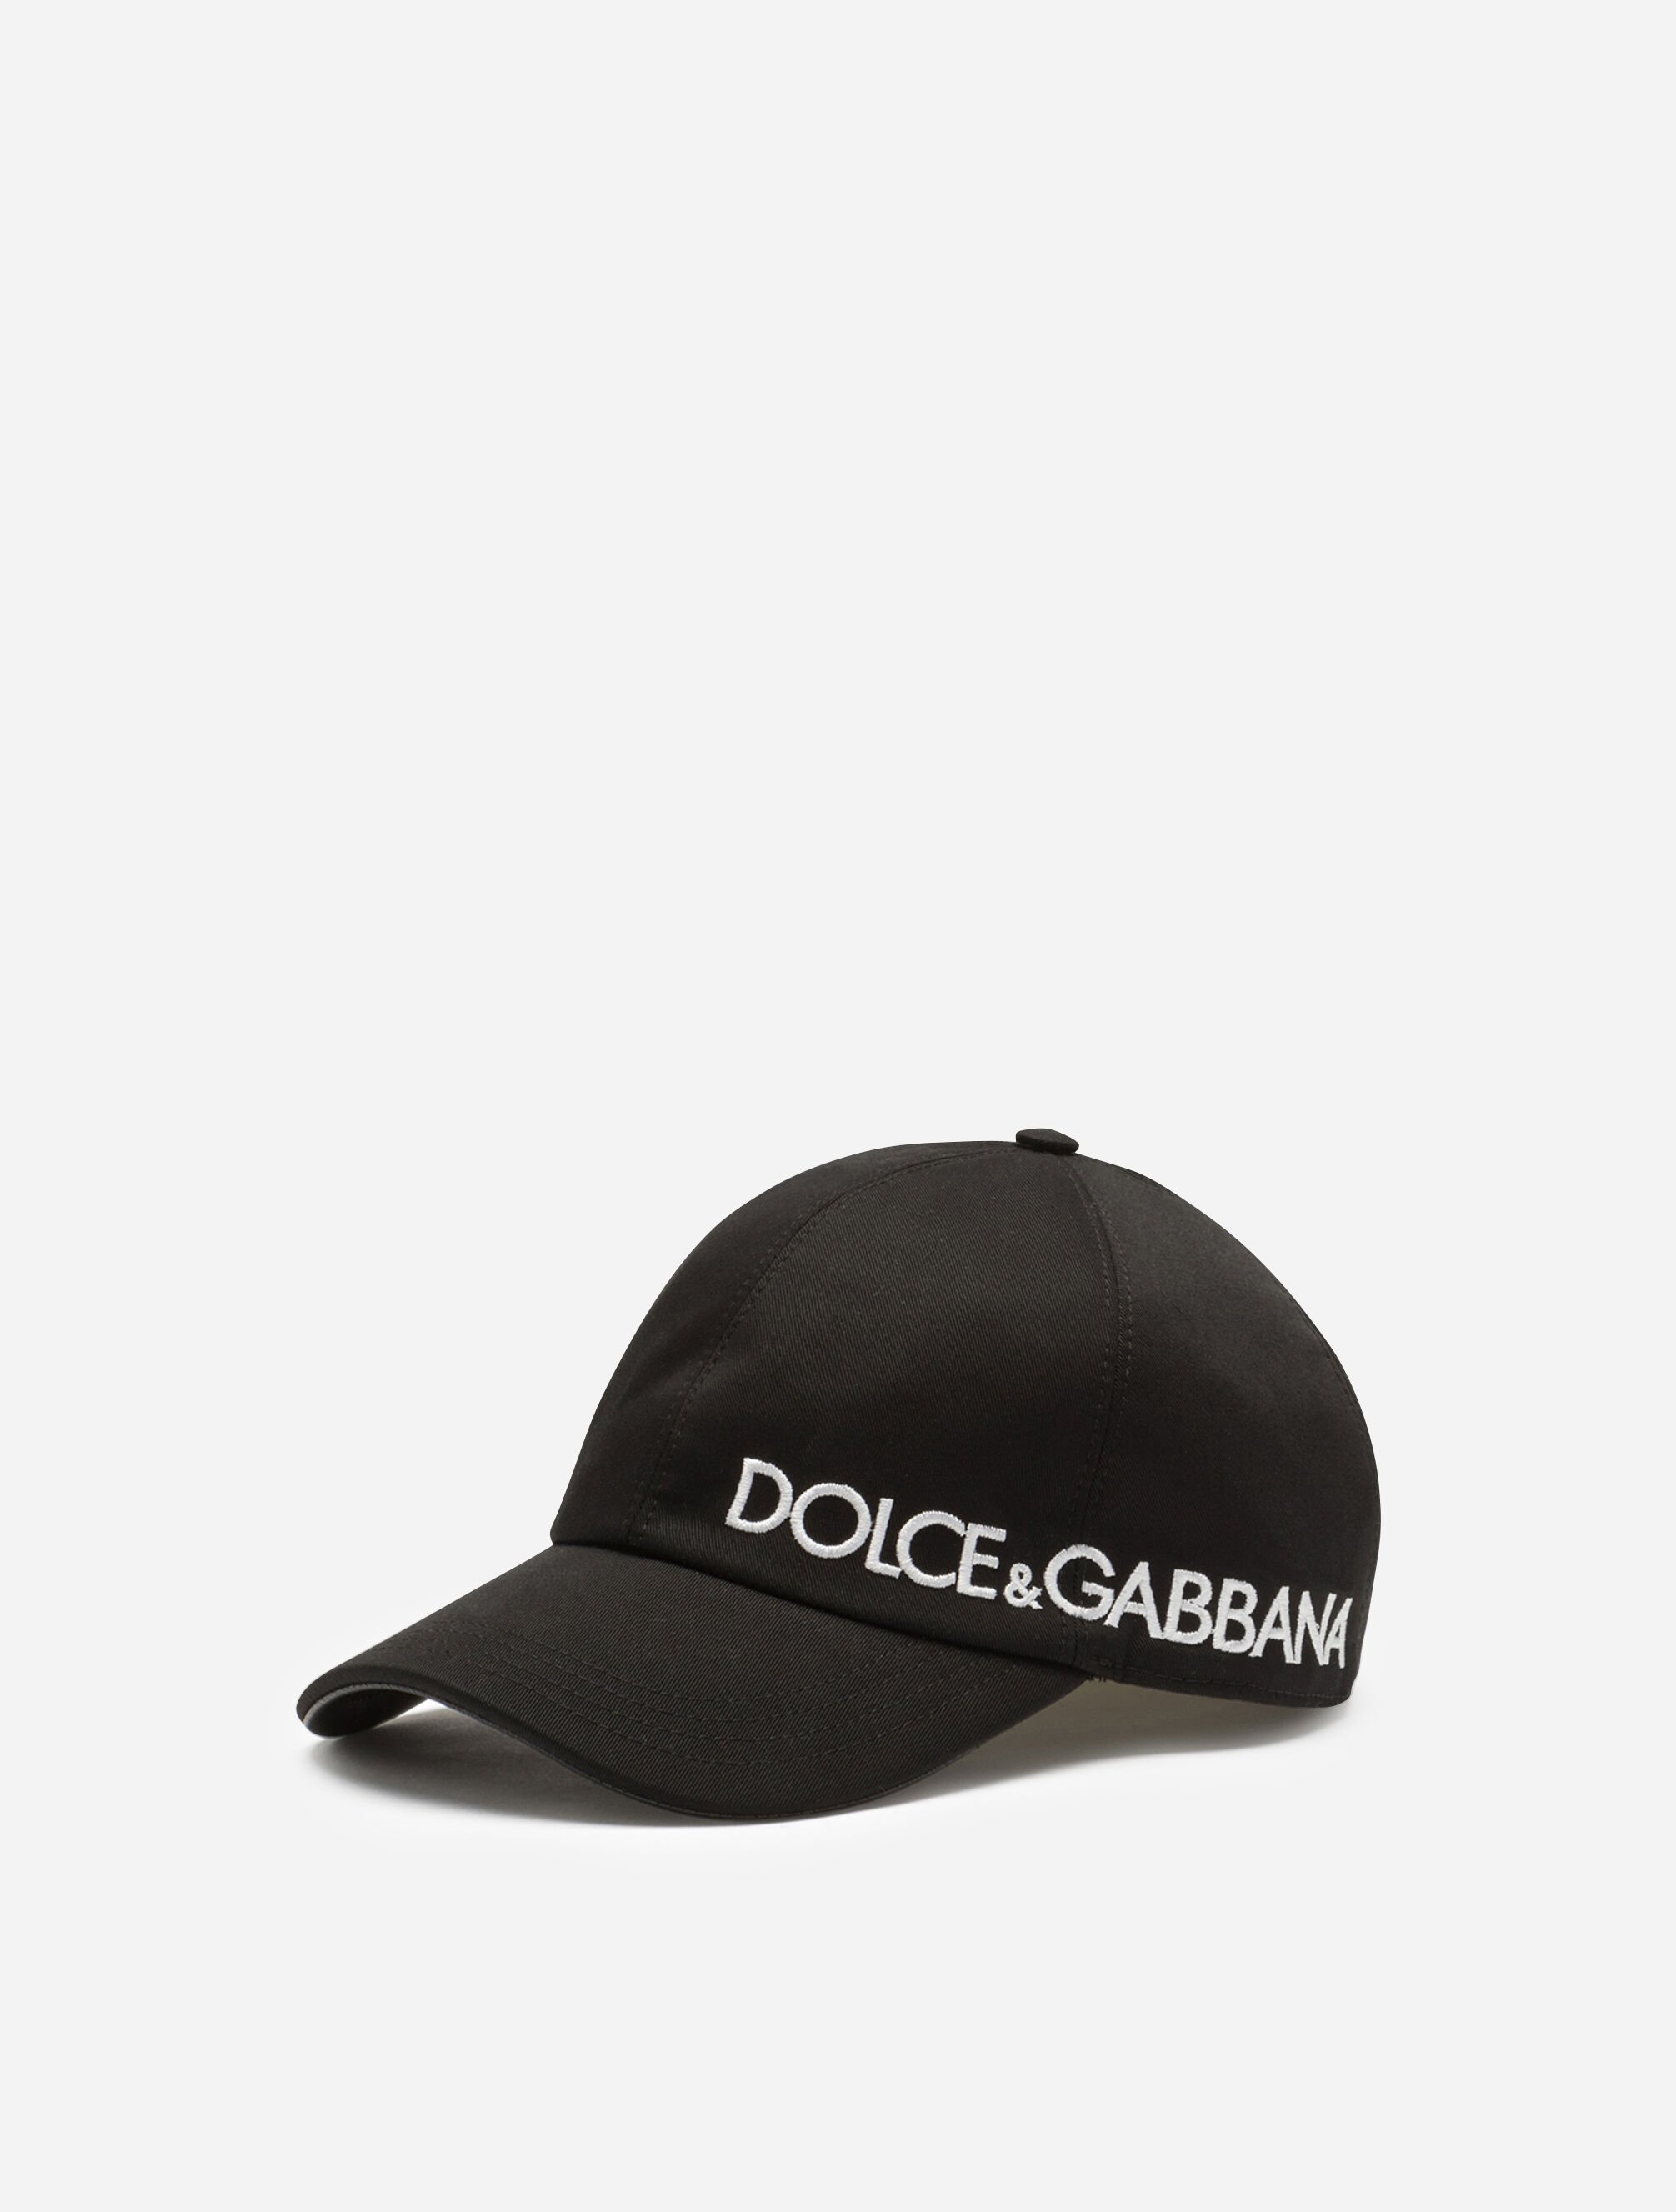 Dolce & Gabbana Dolce&Gabbana baseball cap with embroidery Black VG443FVP187